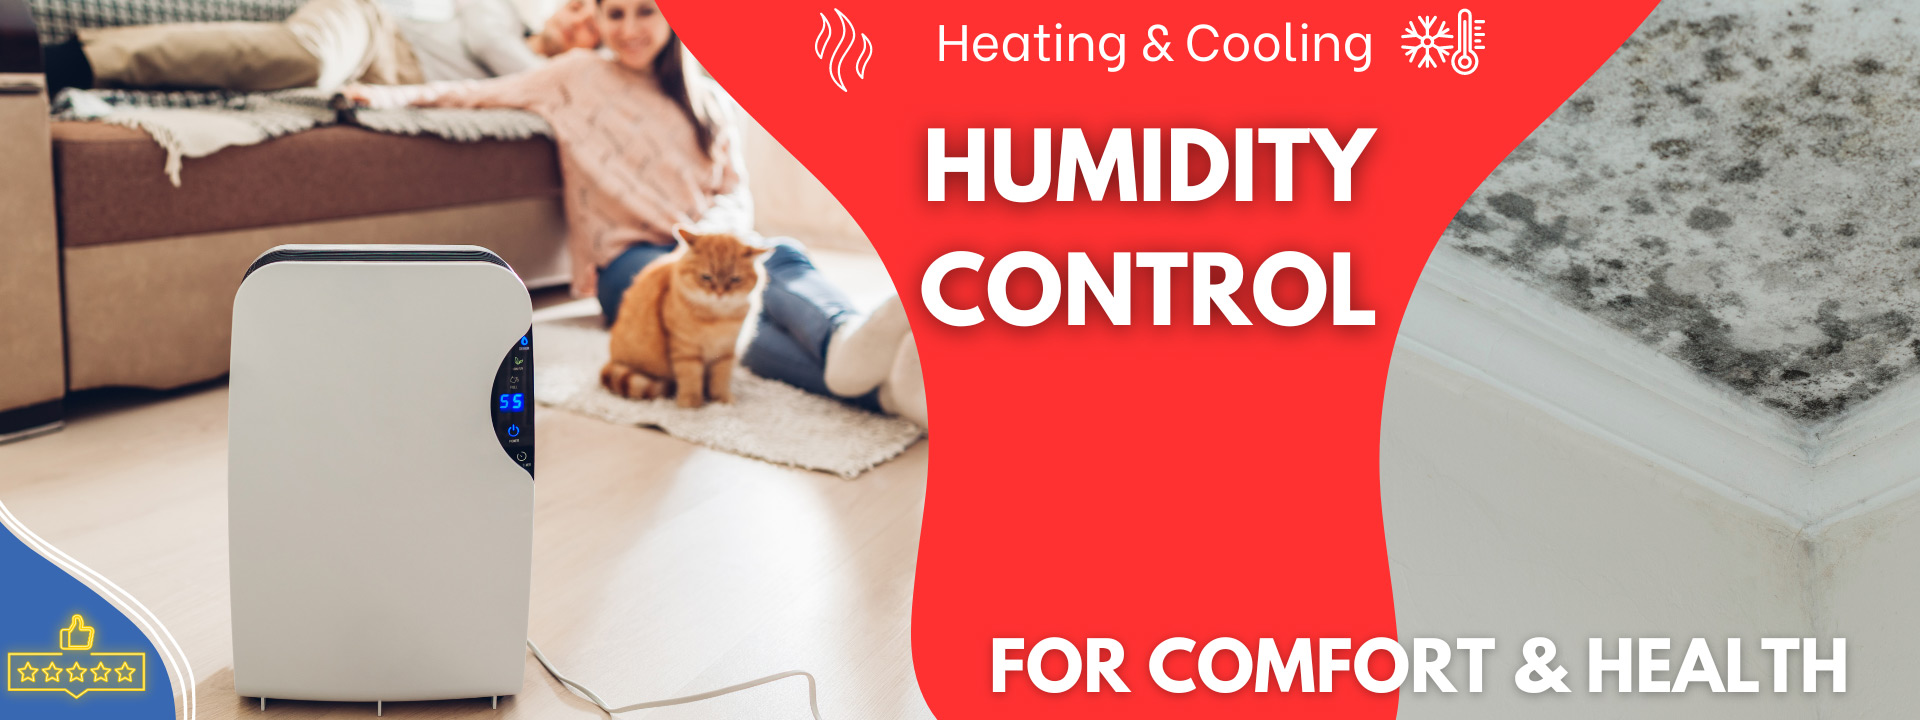 Humidity Control - Humidifiers/Dehumidifiers